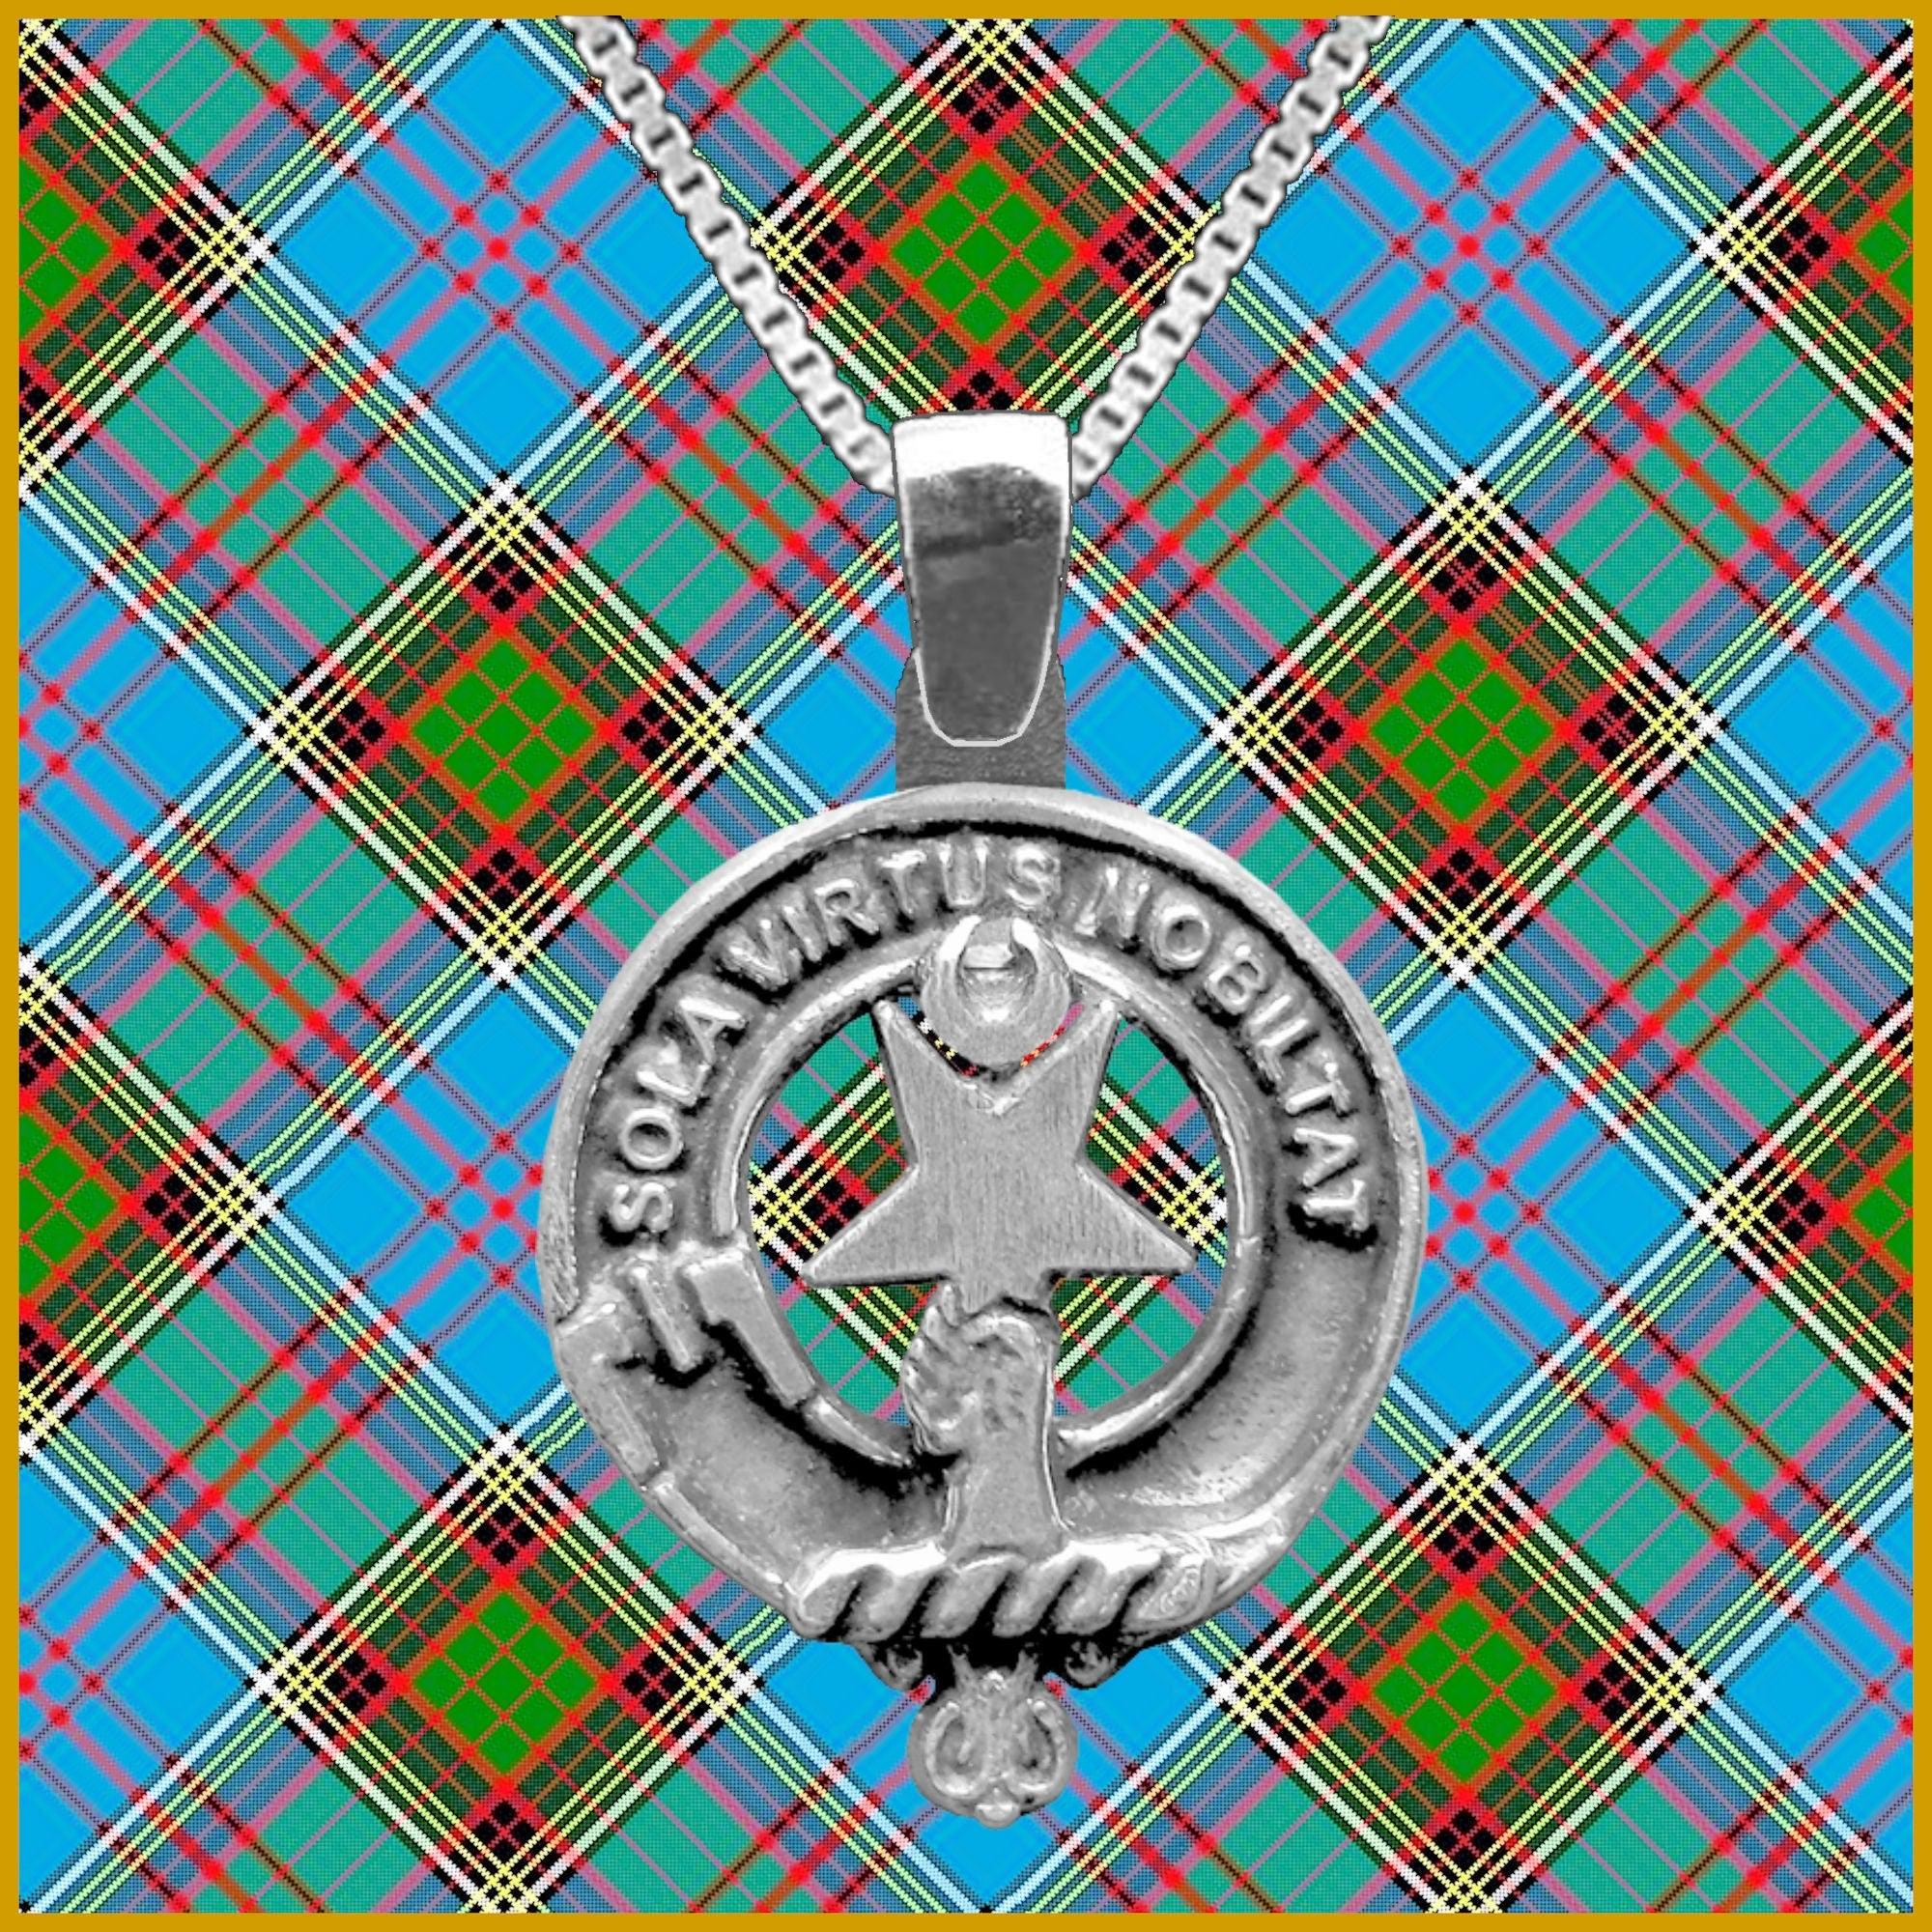 Henderson Large 1" Scottish Clan Crest Pendant - Sterling Silver